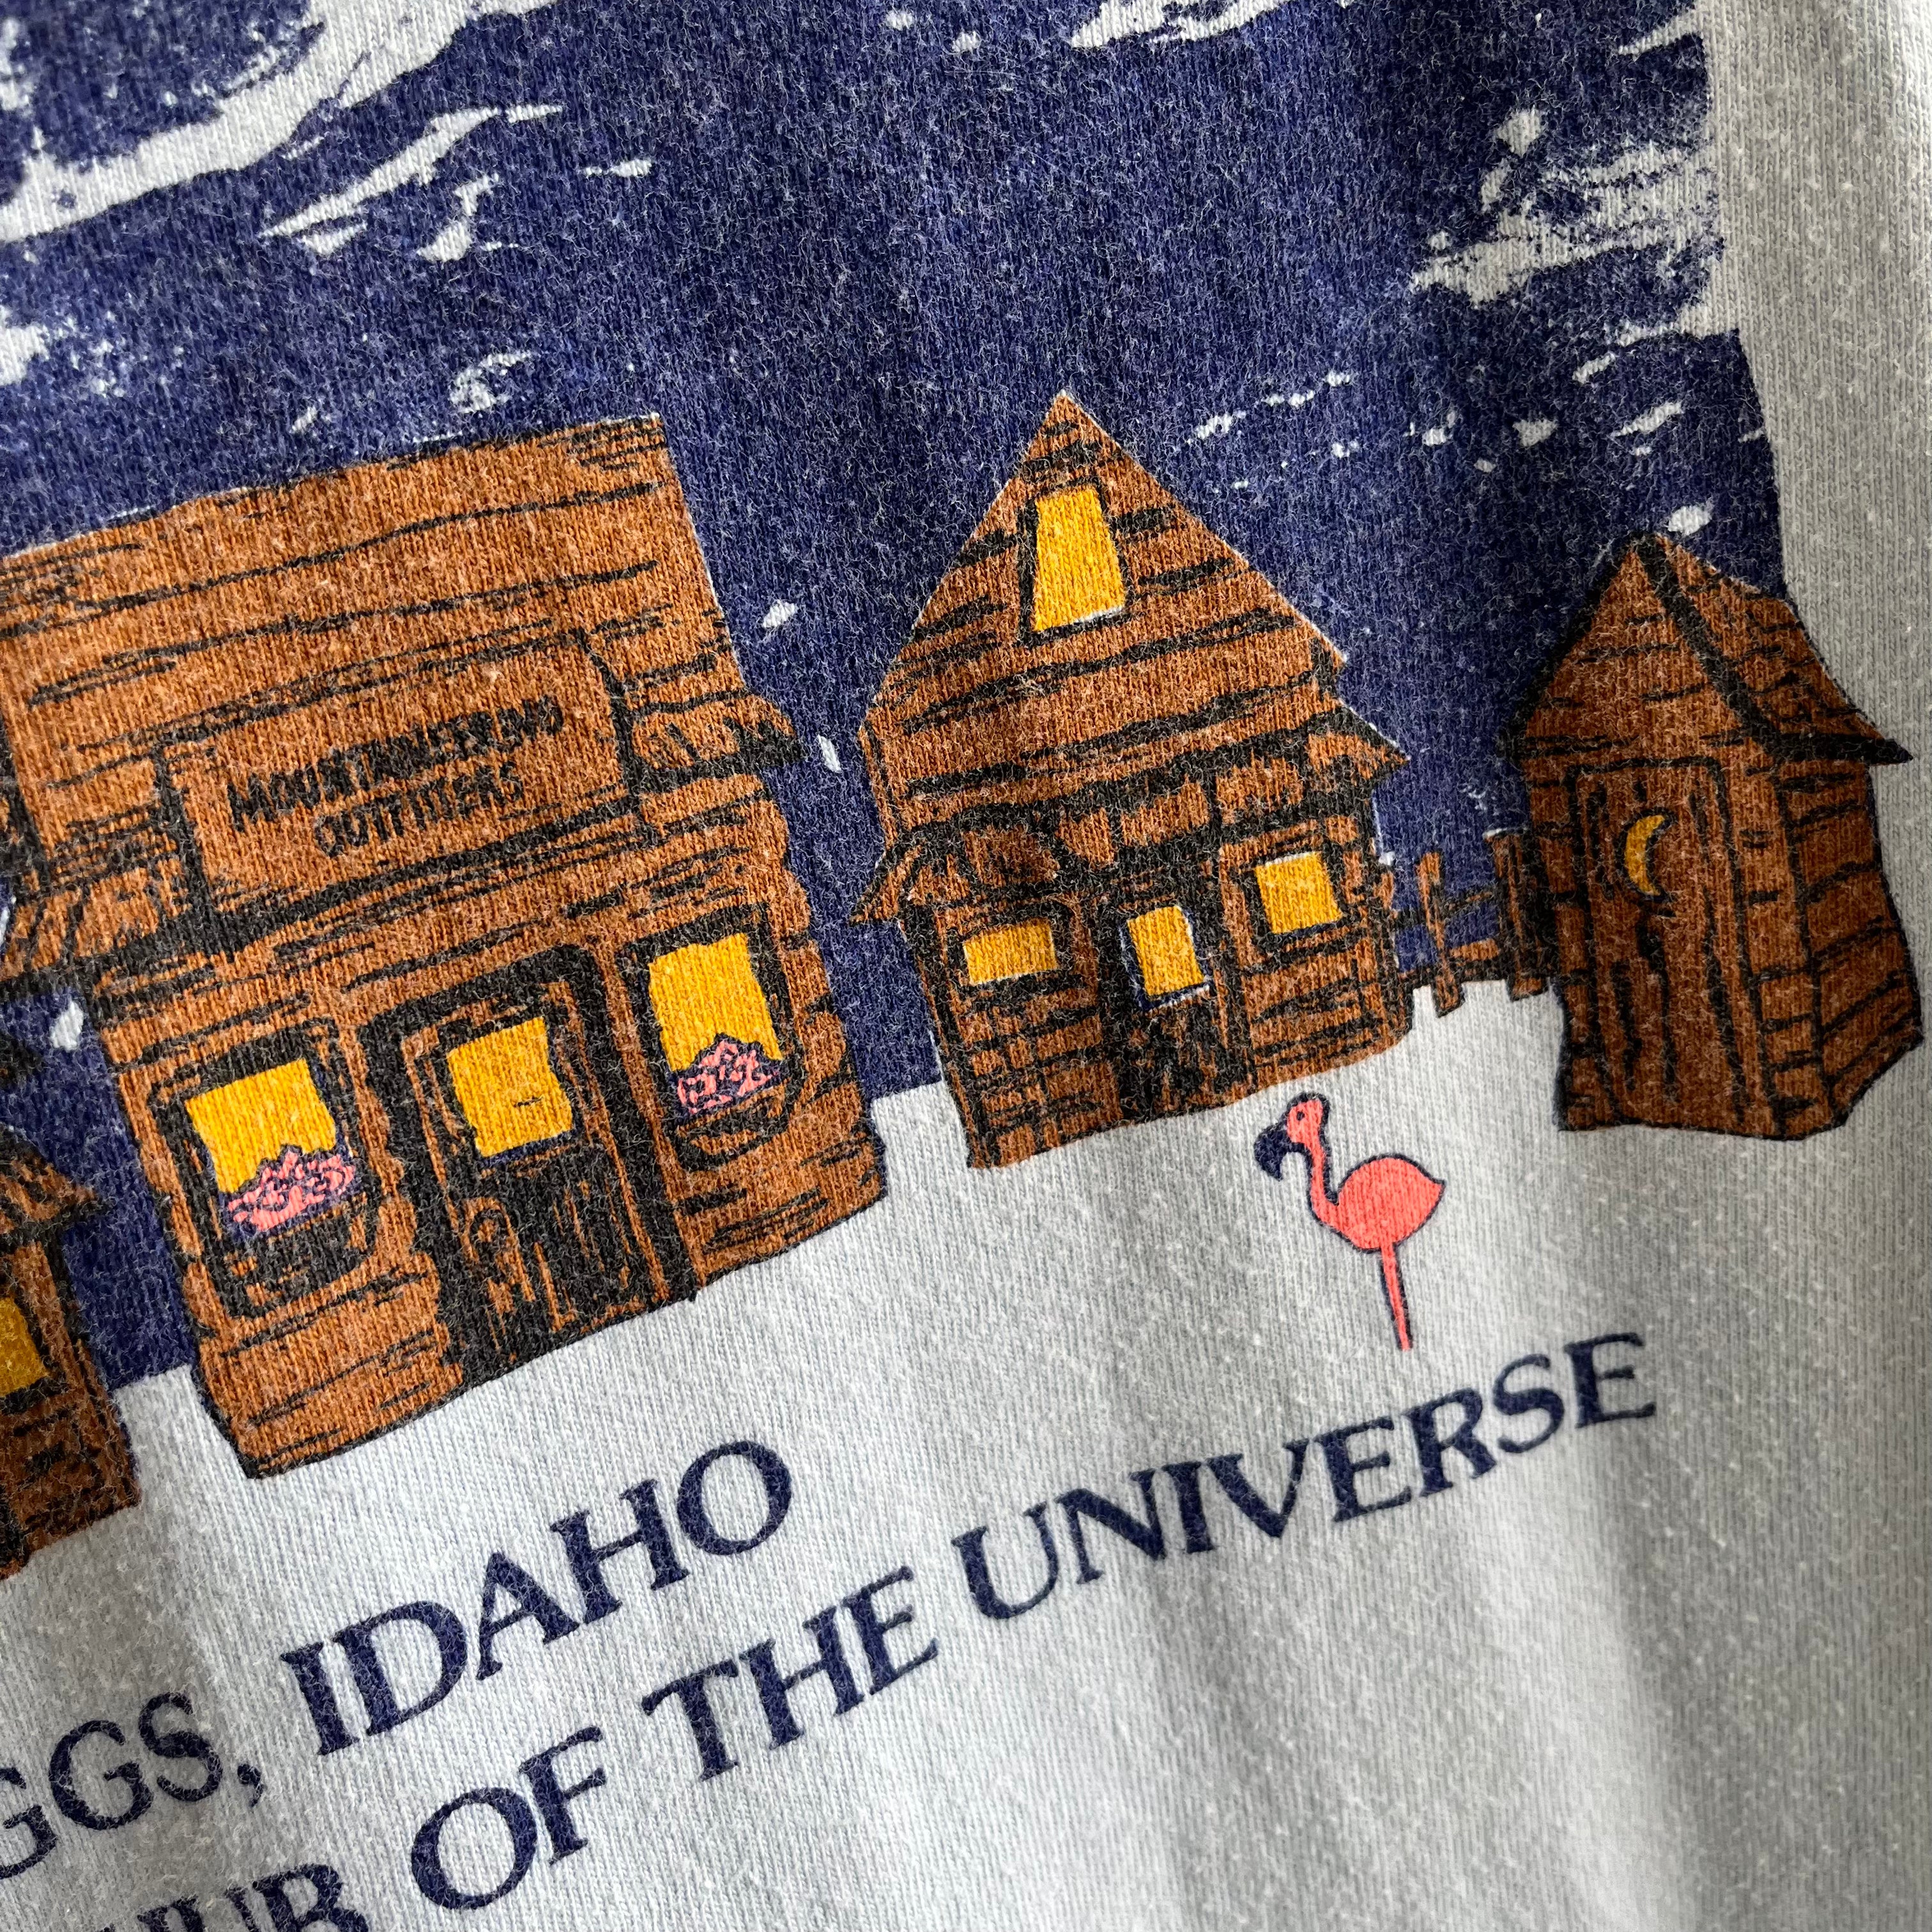 1980s Driggs, Idaho - The Cultural Hub of the Universe - Long Sleeve Cotton T-Shirt